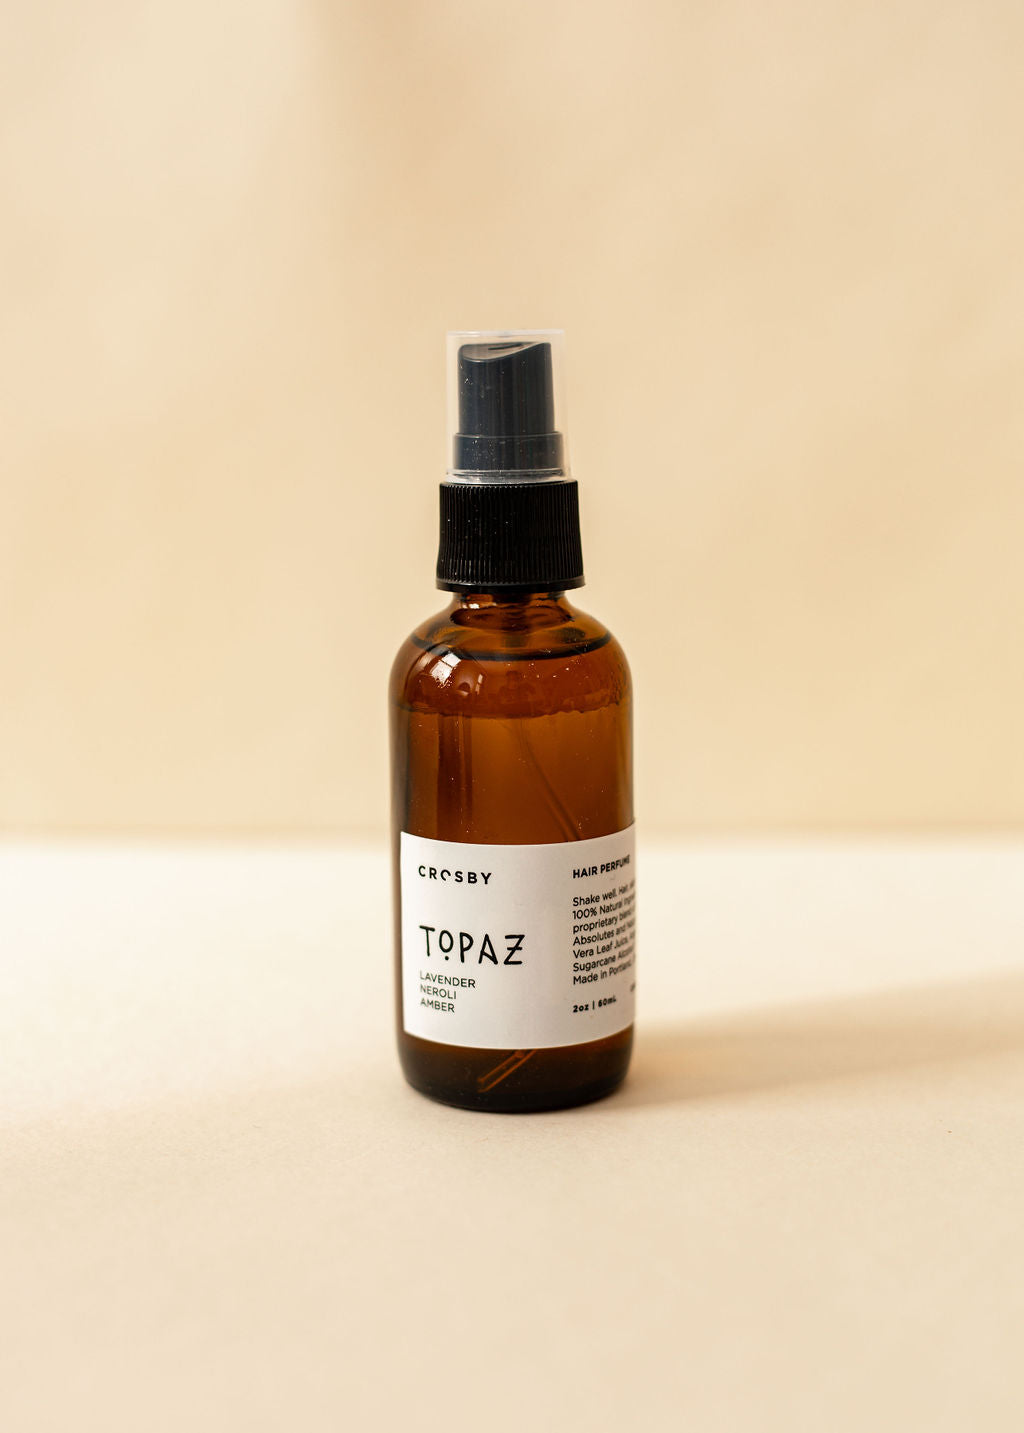 A single amber spray bottle of hair perfume, Topaz